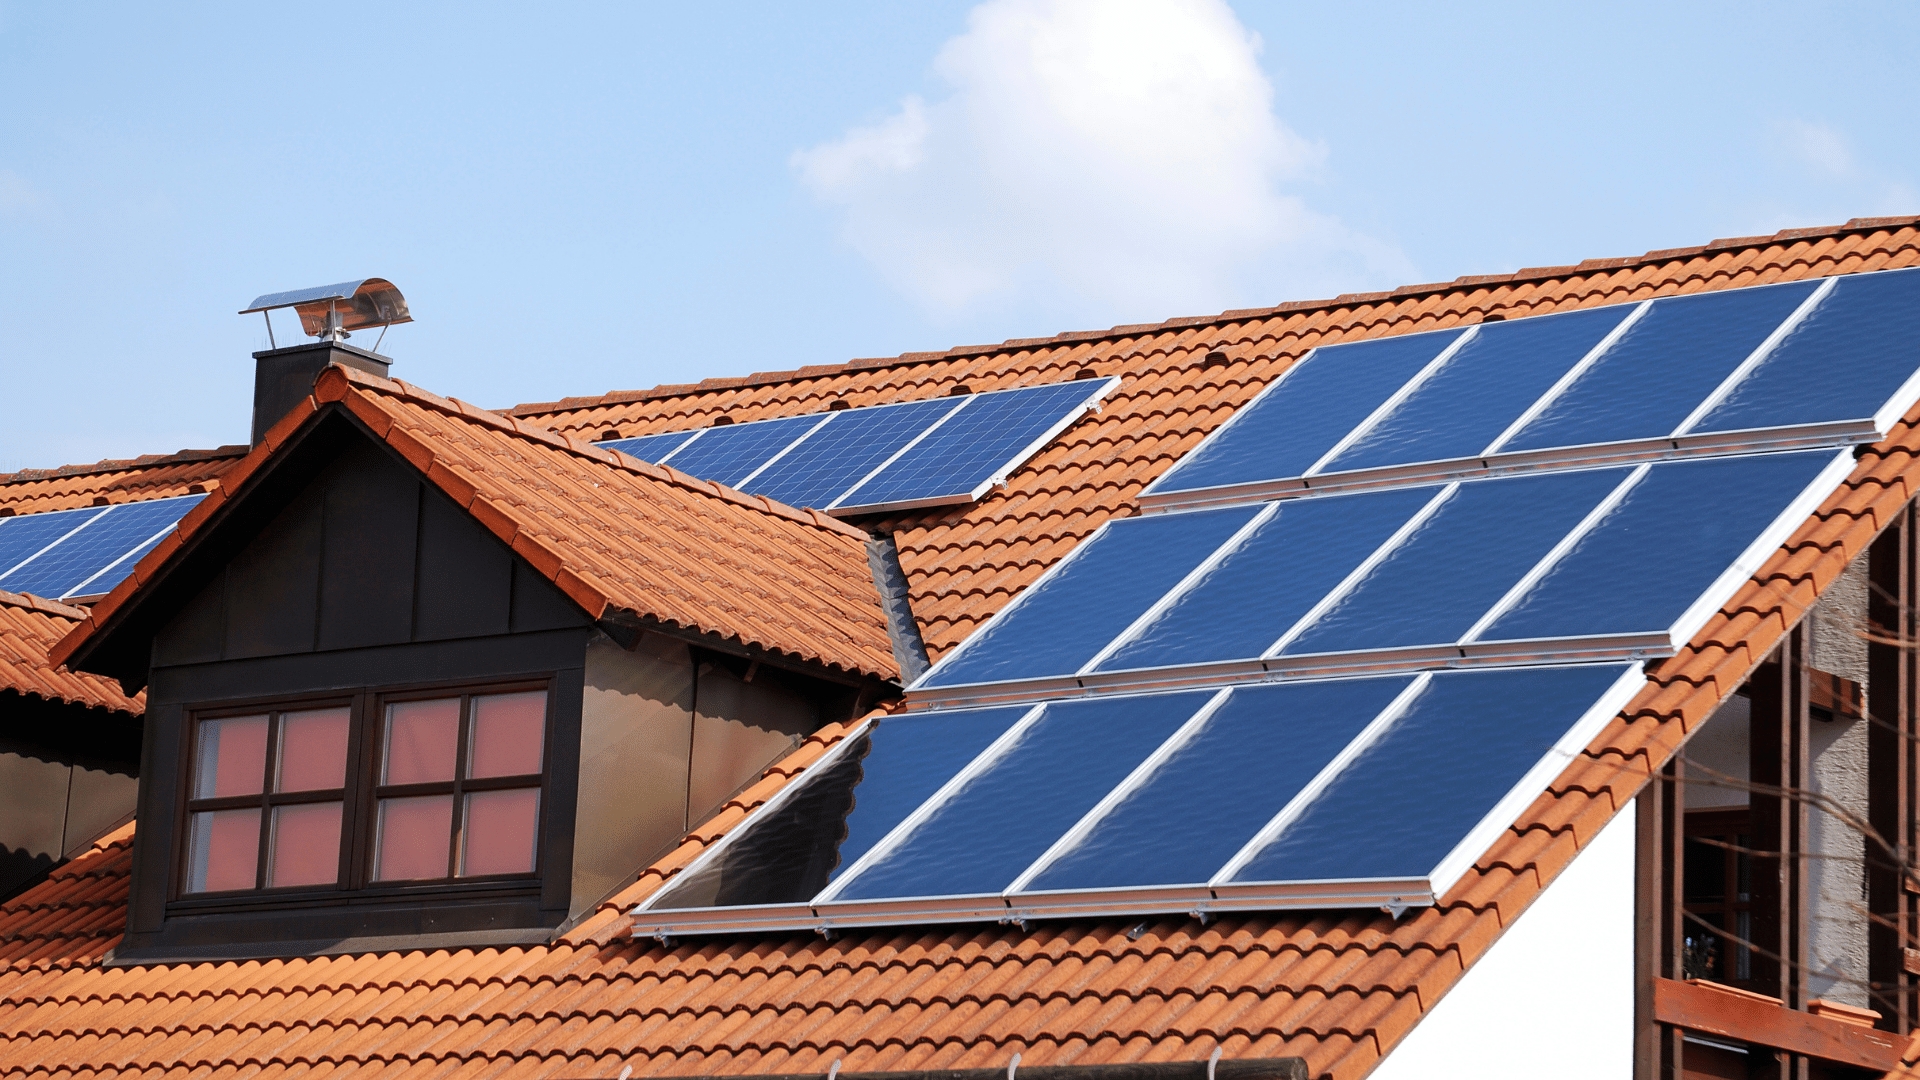 Solar panels, a greener form of energy